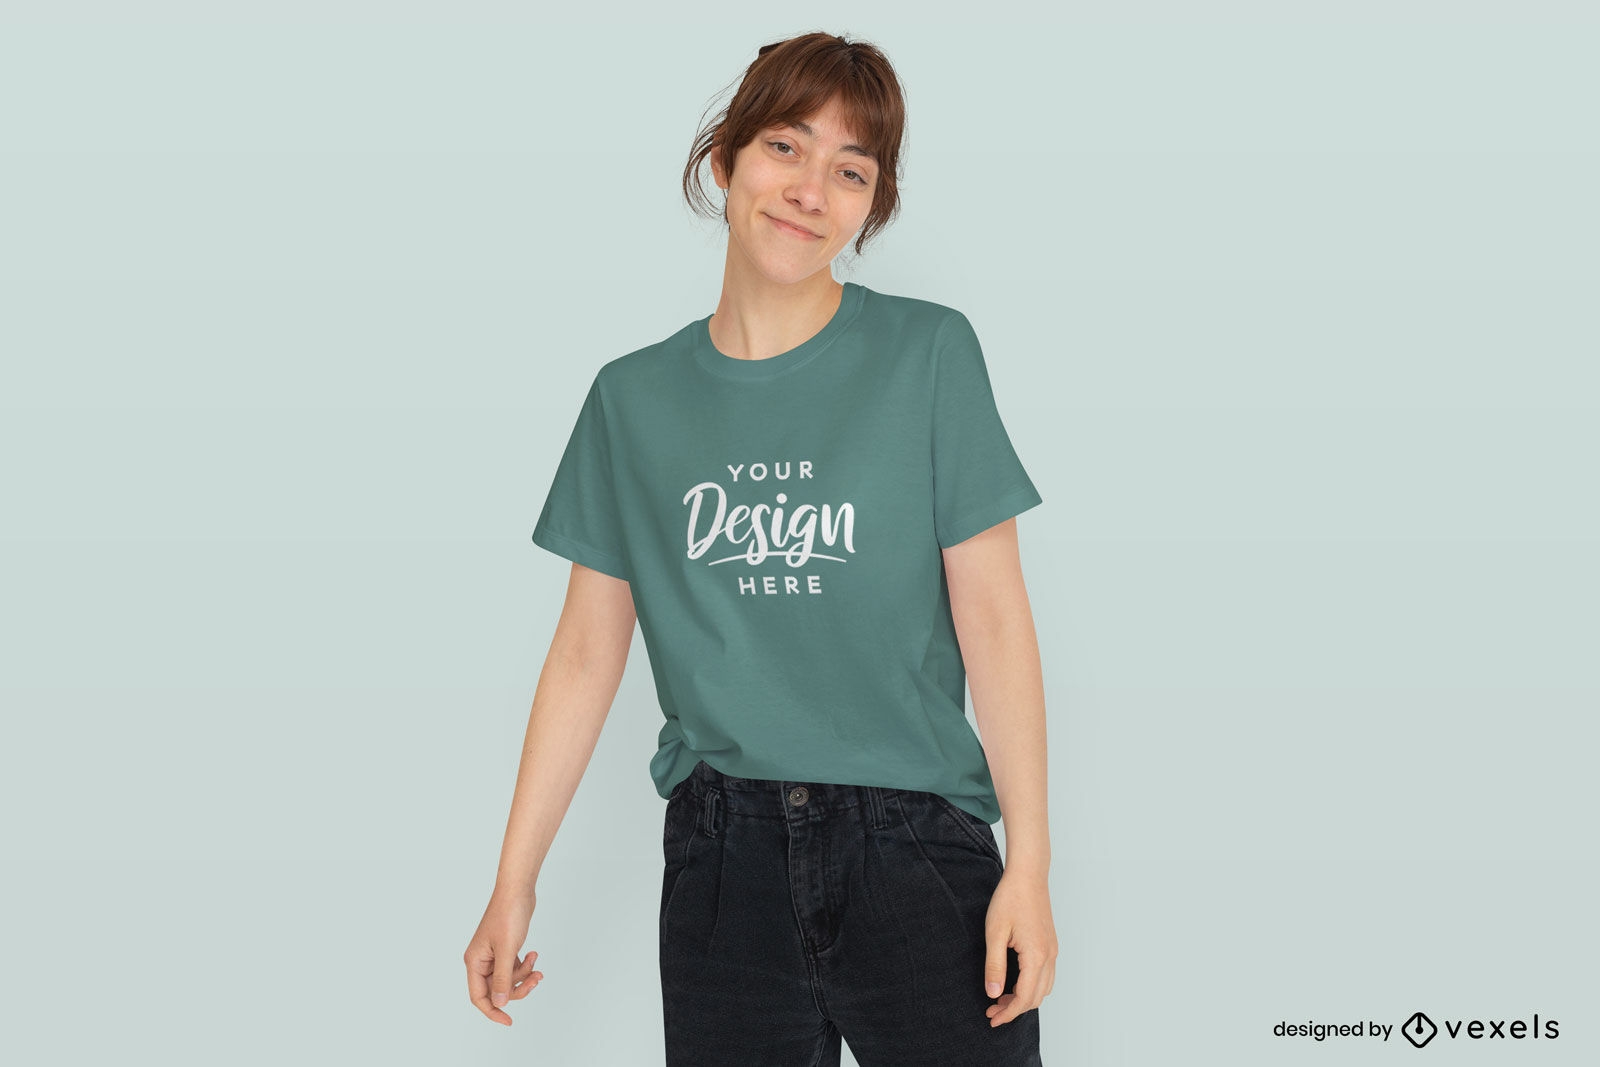 Brünette Frau im Pferdeschwanz-T-Shirt-Modell